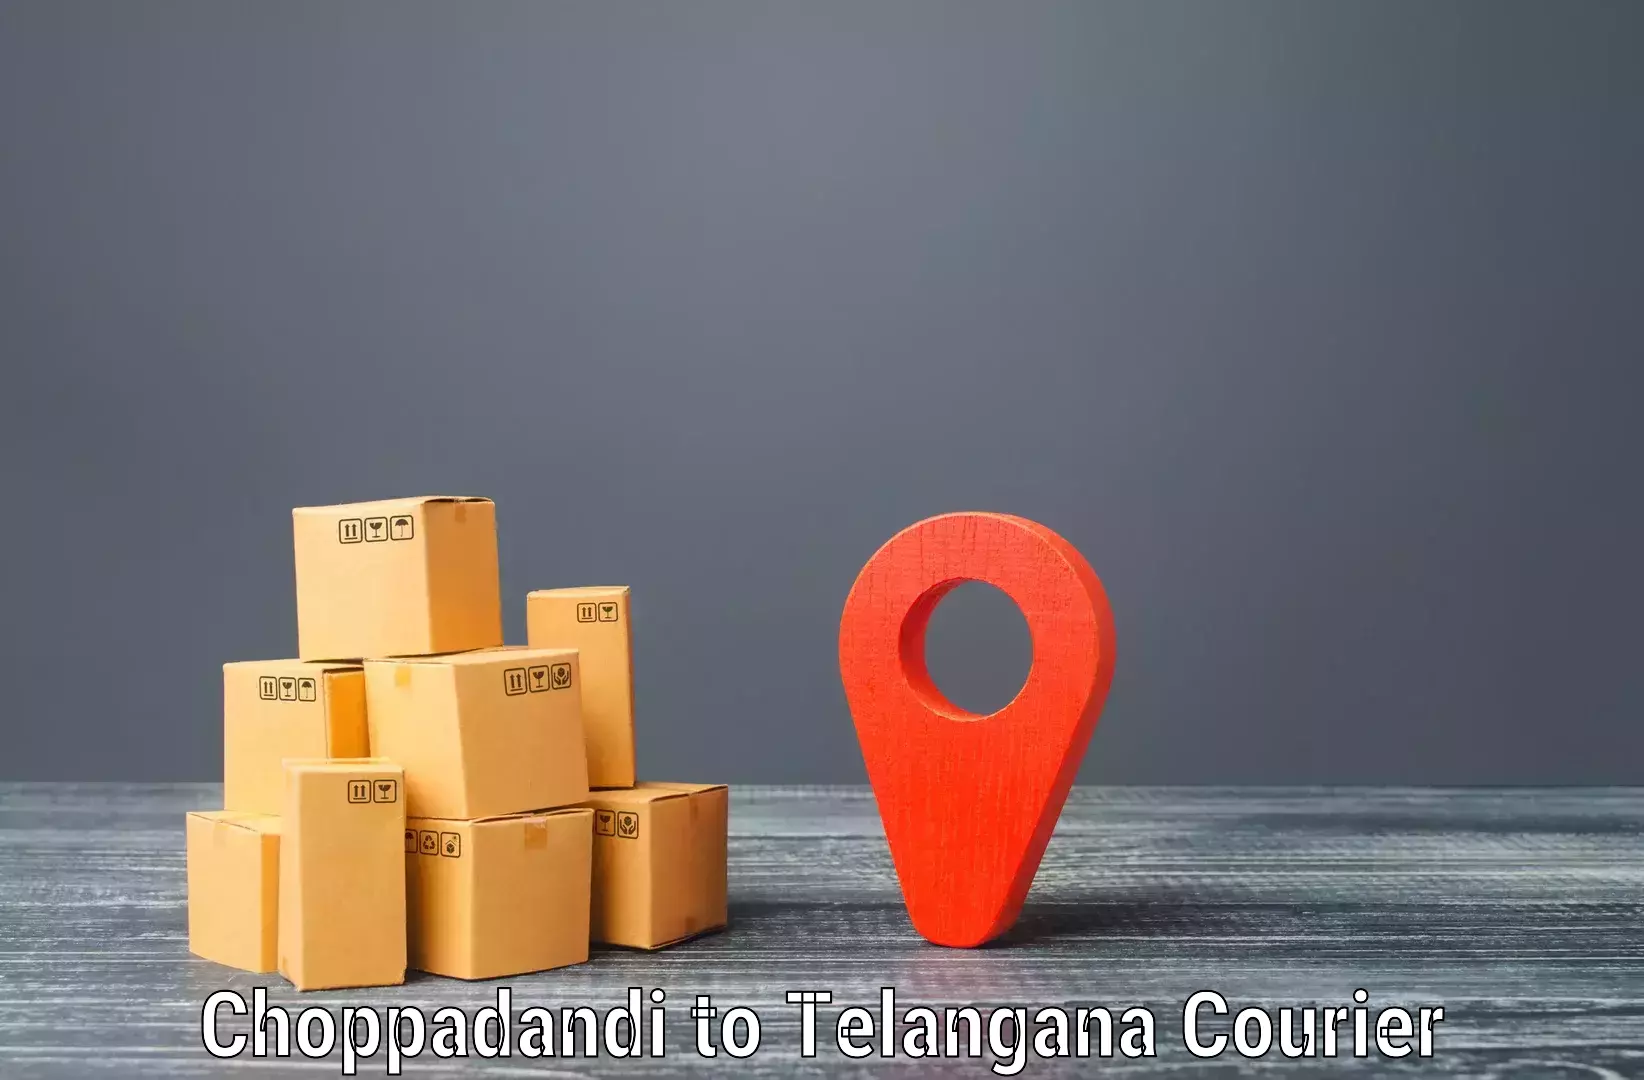 Cargo delivery service Choppadandi to Bodhan